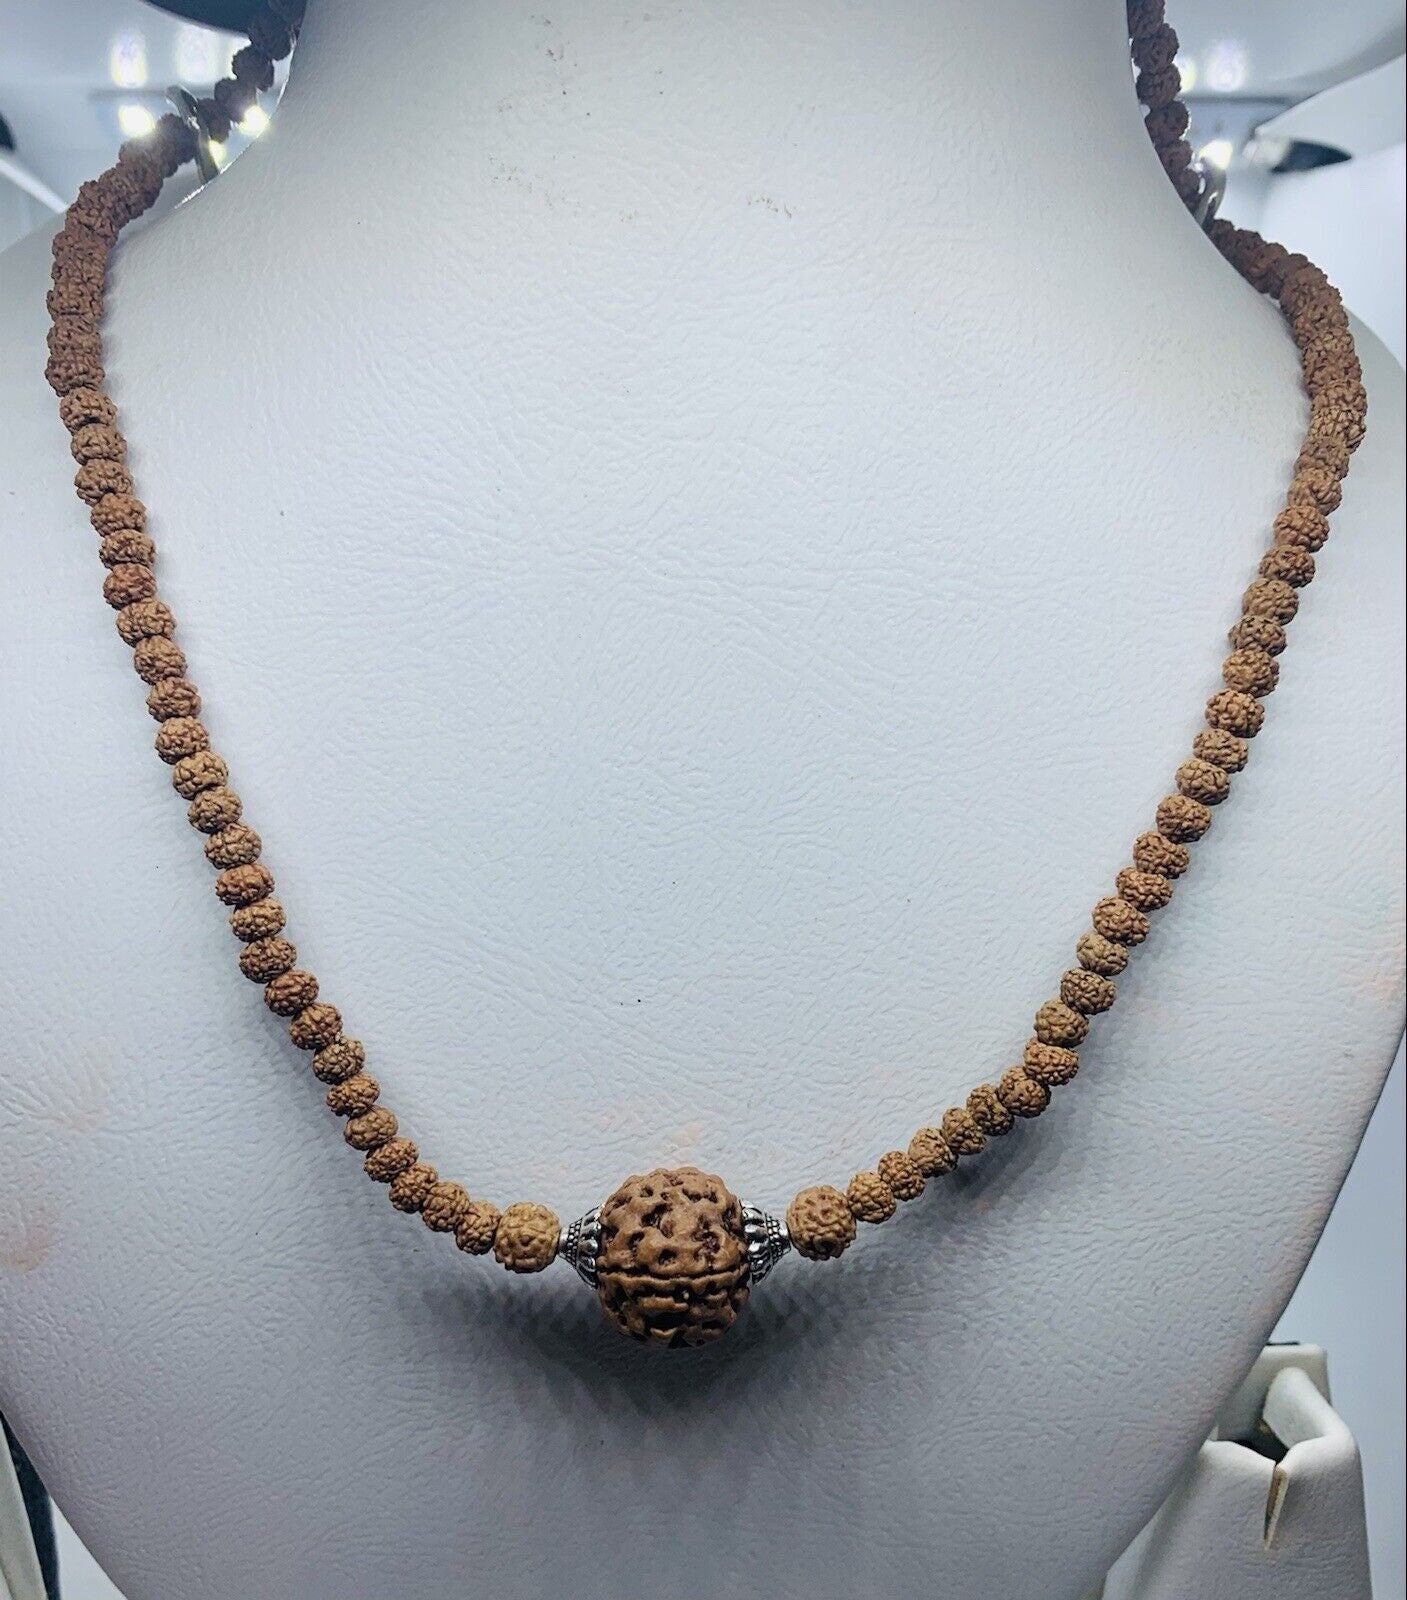 Rudraksha choker necklace - Spiritual jewelry - 5 Mukhi Rudraksha - Natural seed - Chakra balance jewelry Necklace - Meditation/Protection